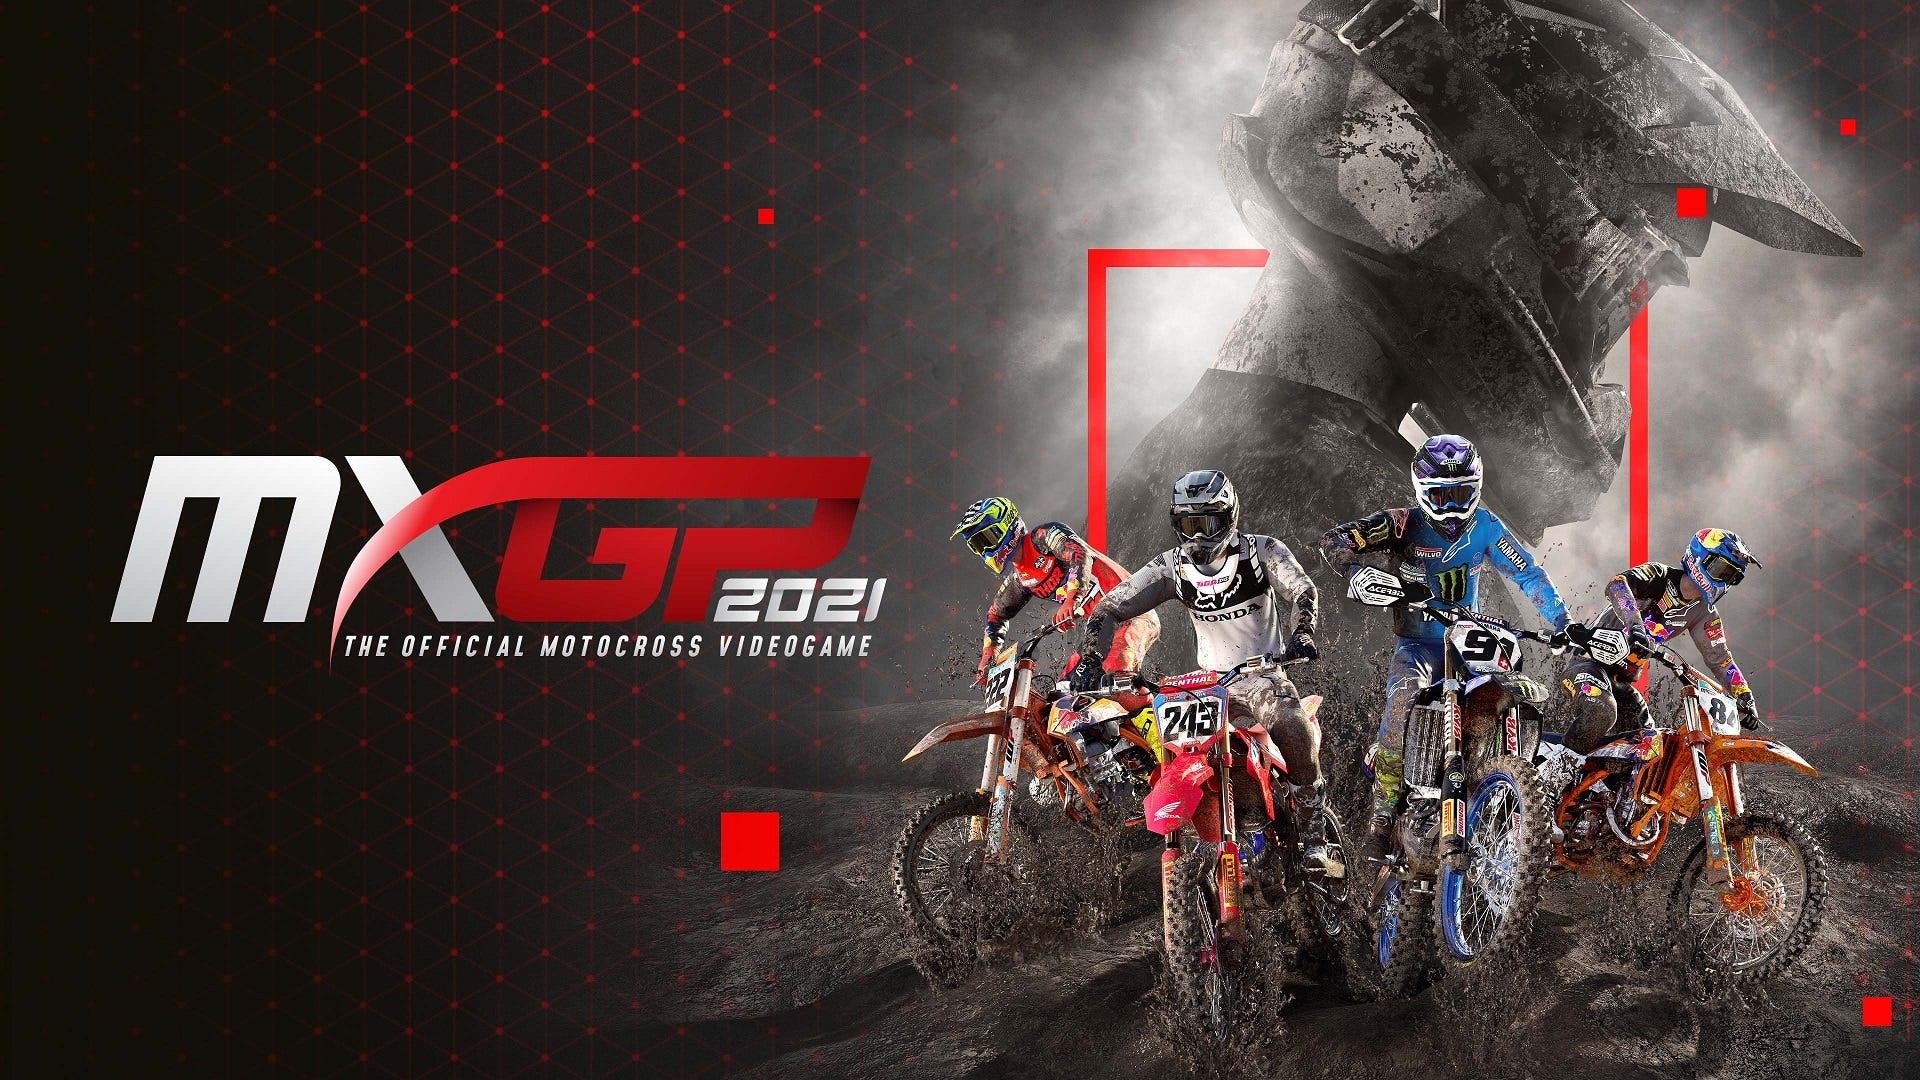 Review — MXGP 2021 The Official Motocross Videogame by Jeroen Van Rossem Tasta